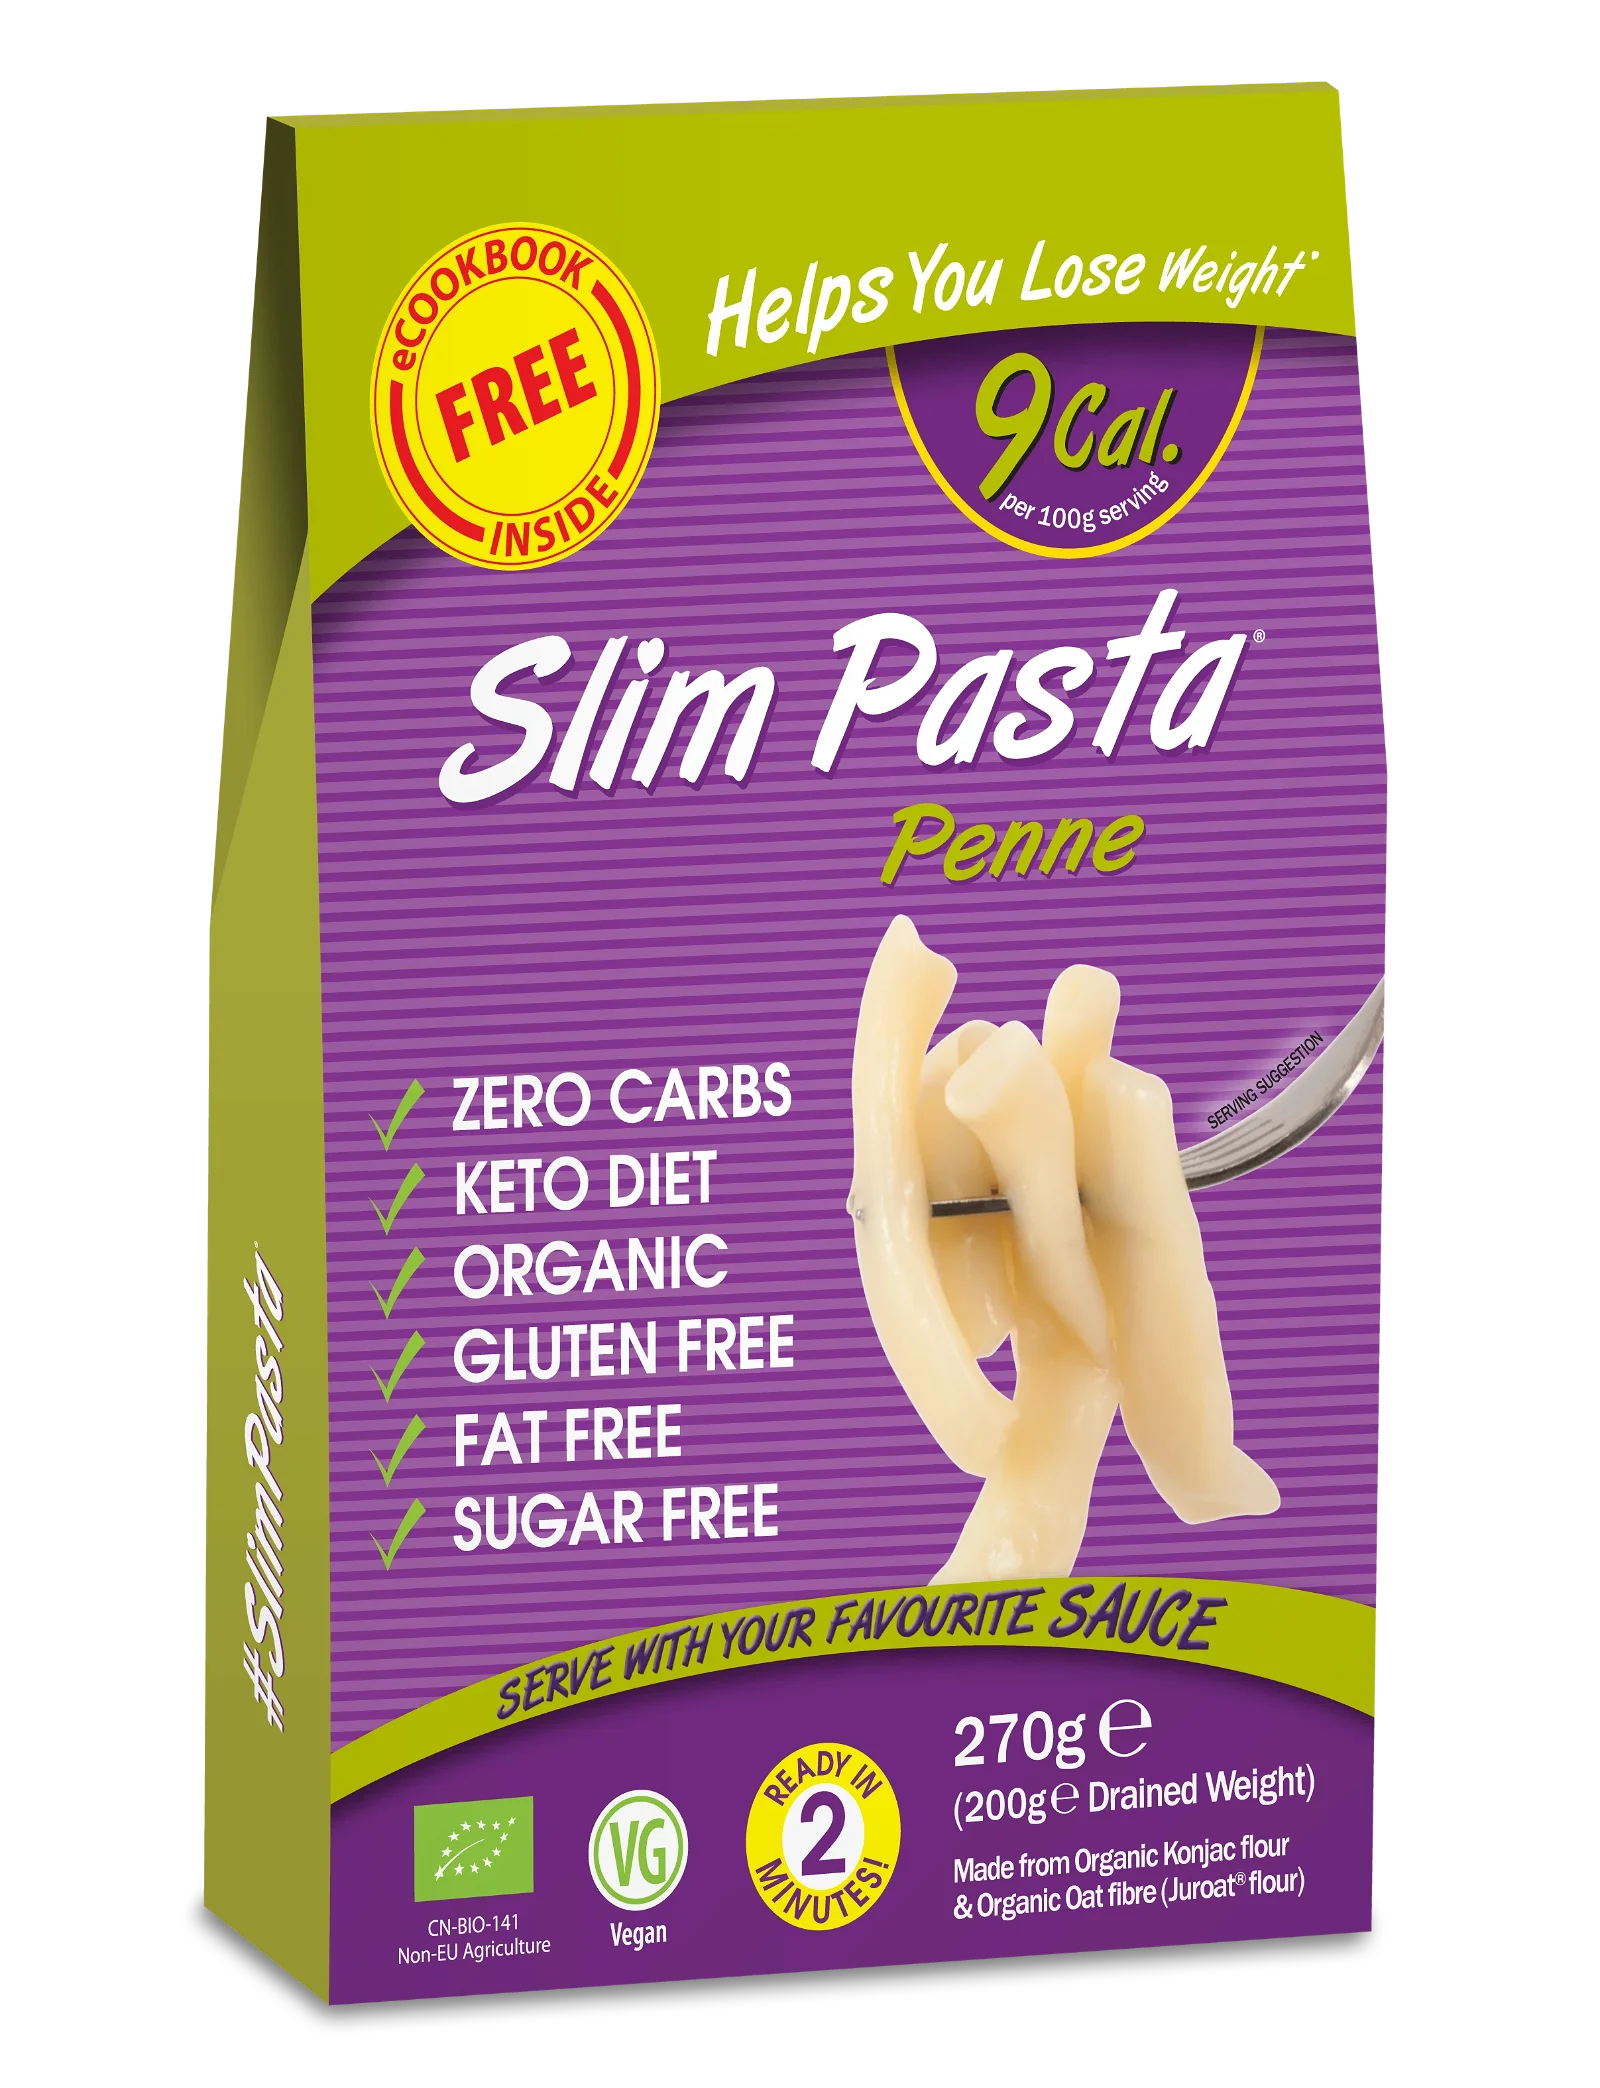 Slim Pasta Penne Original - Pack of 5